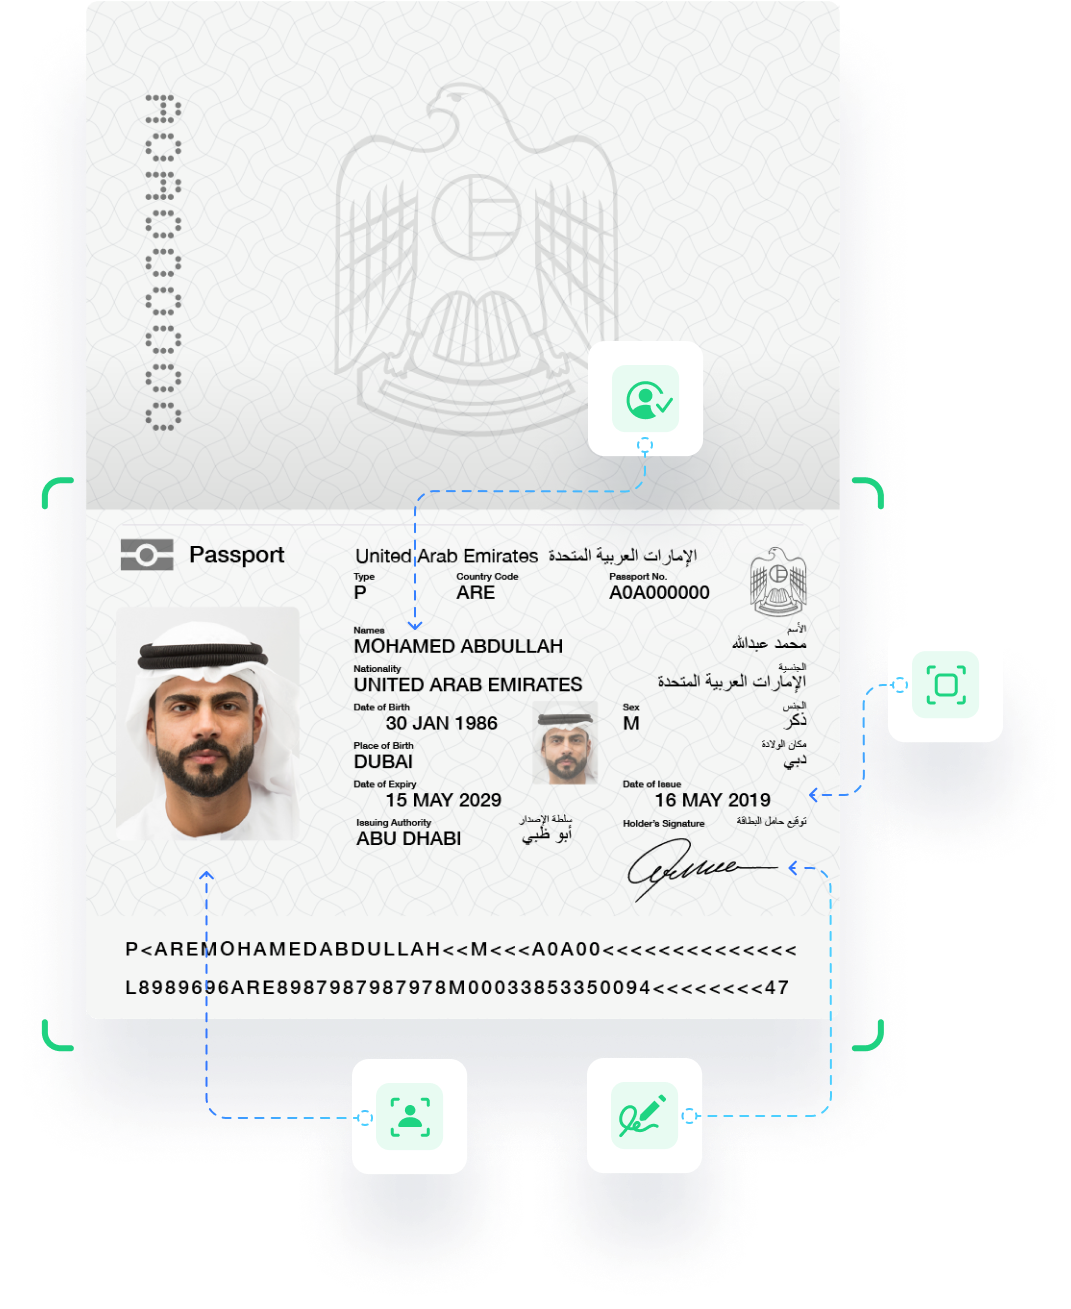 Passport digital identity verification services UAE